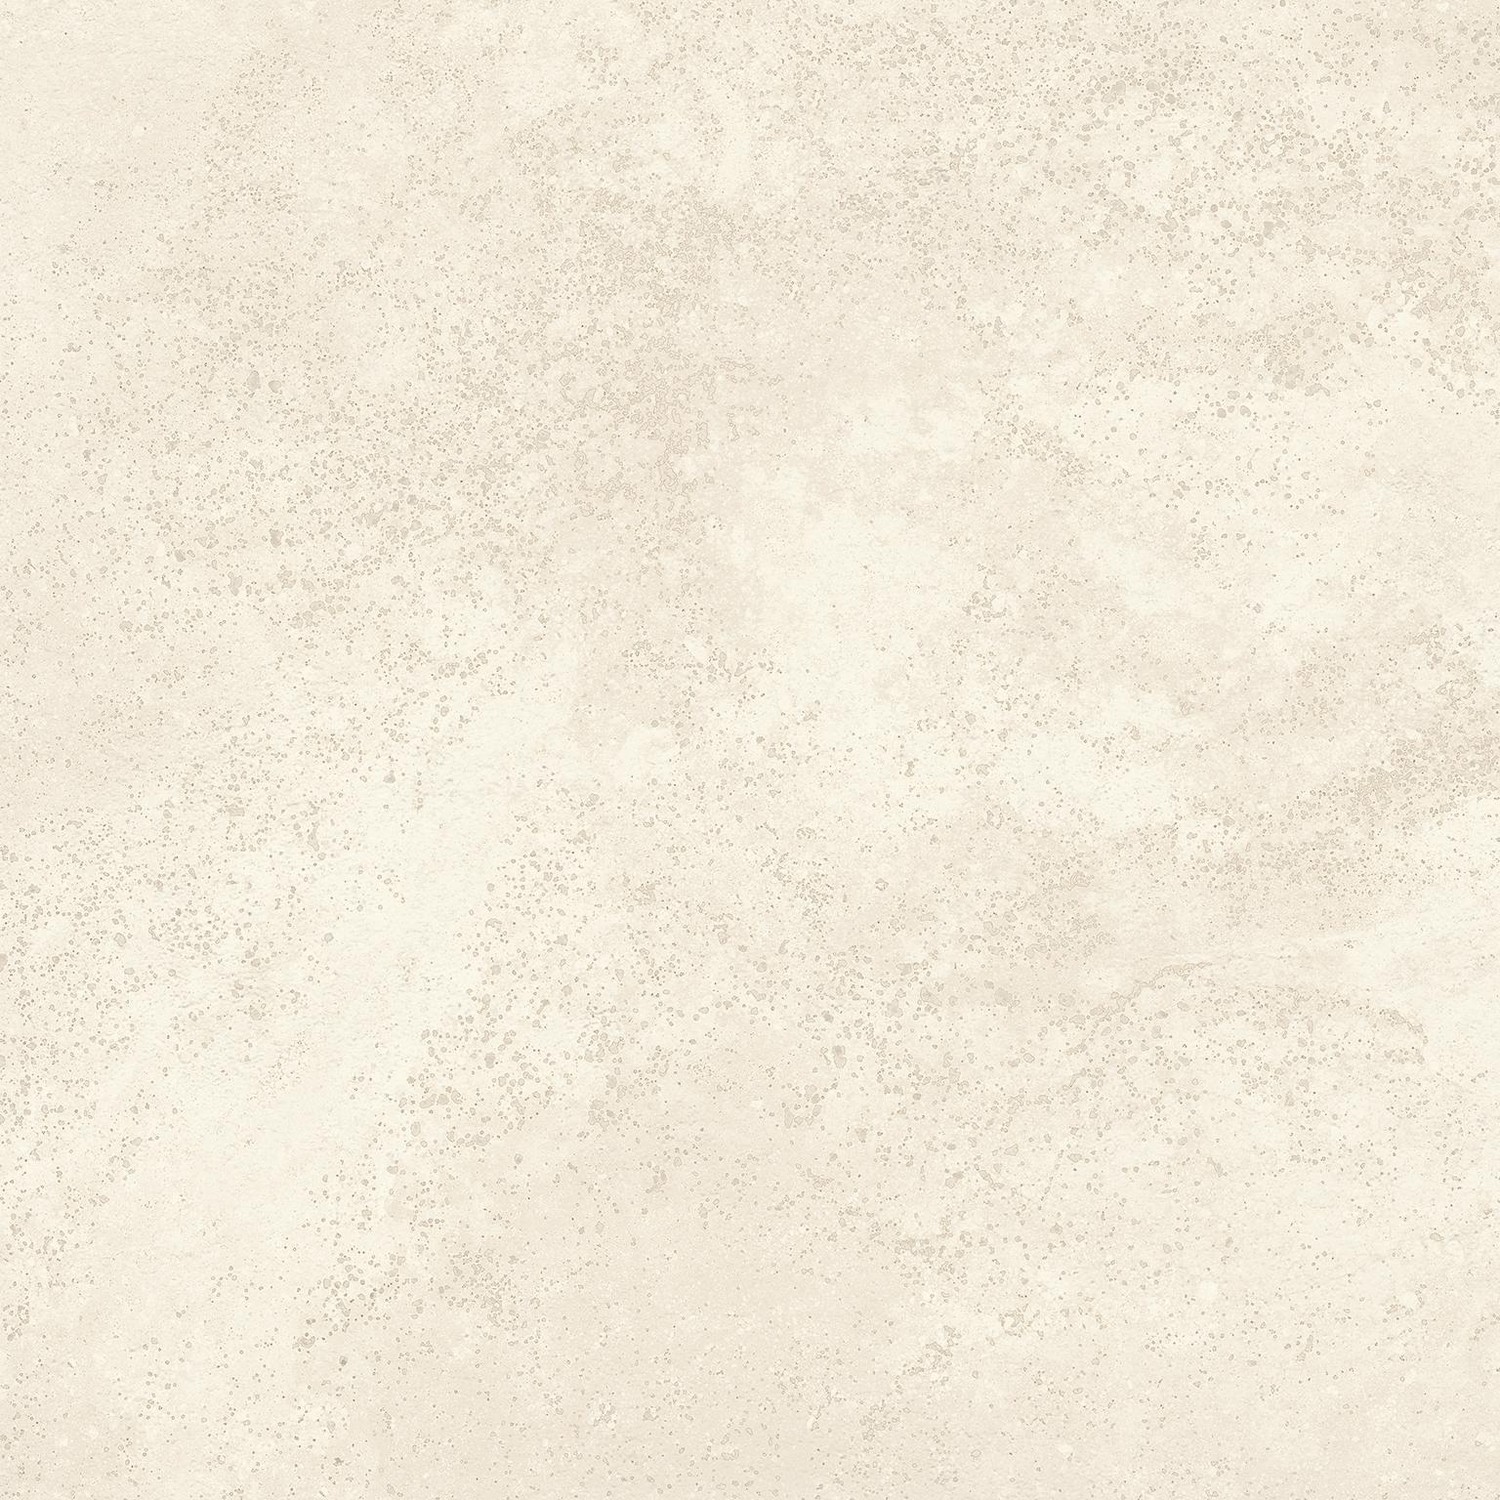 AFUK Напольный Marvel Travertine White Cross Matt 60x60 - фото 4